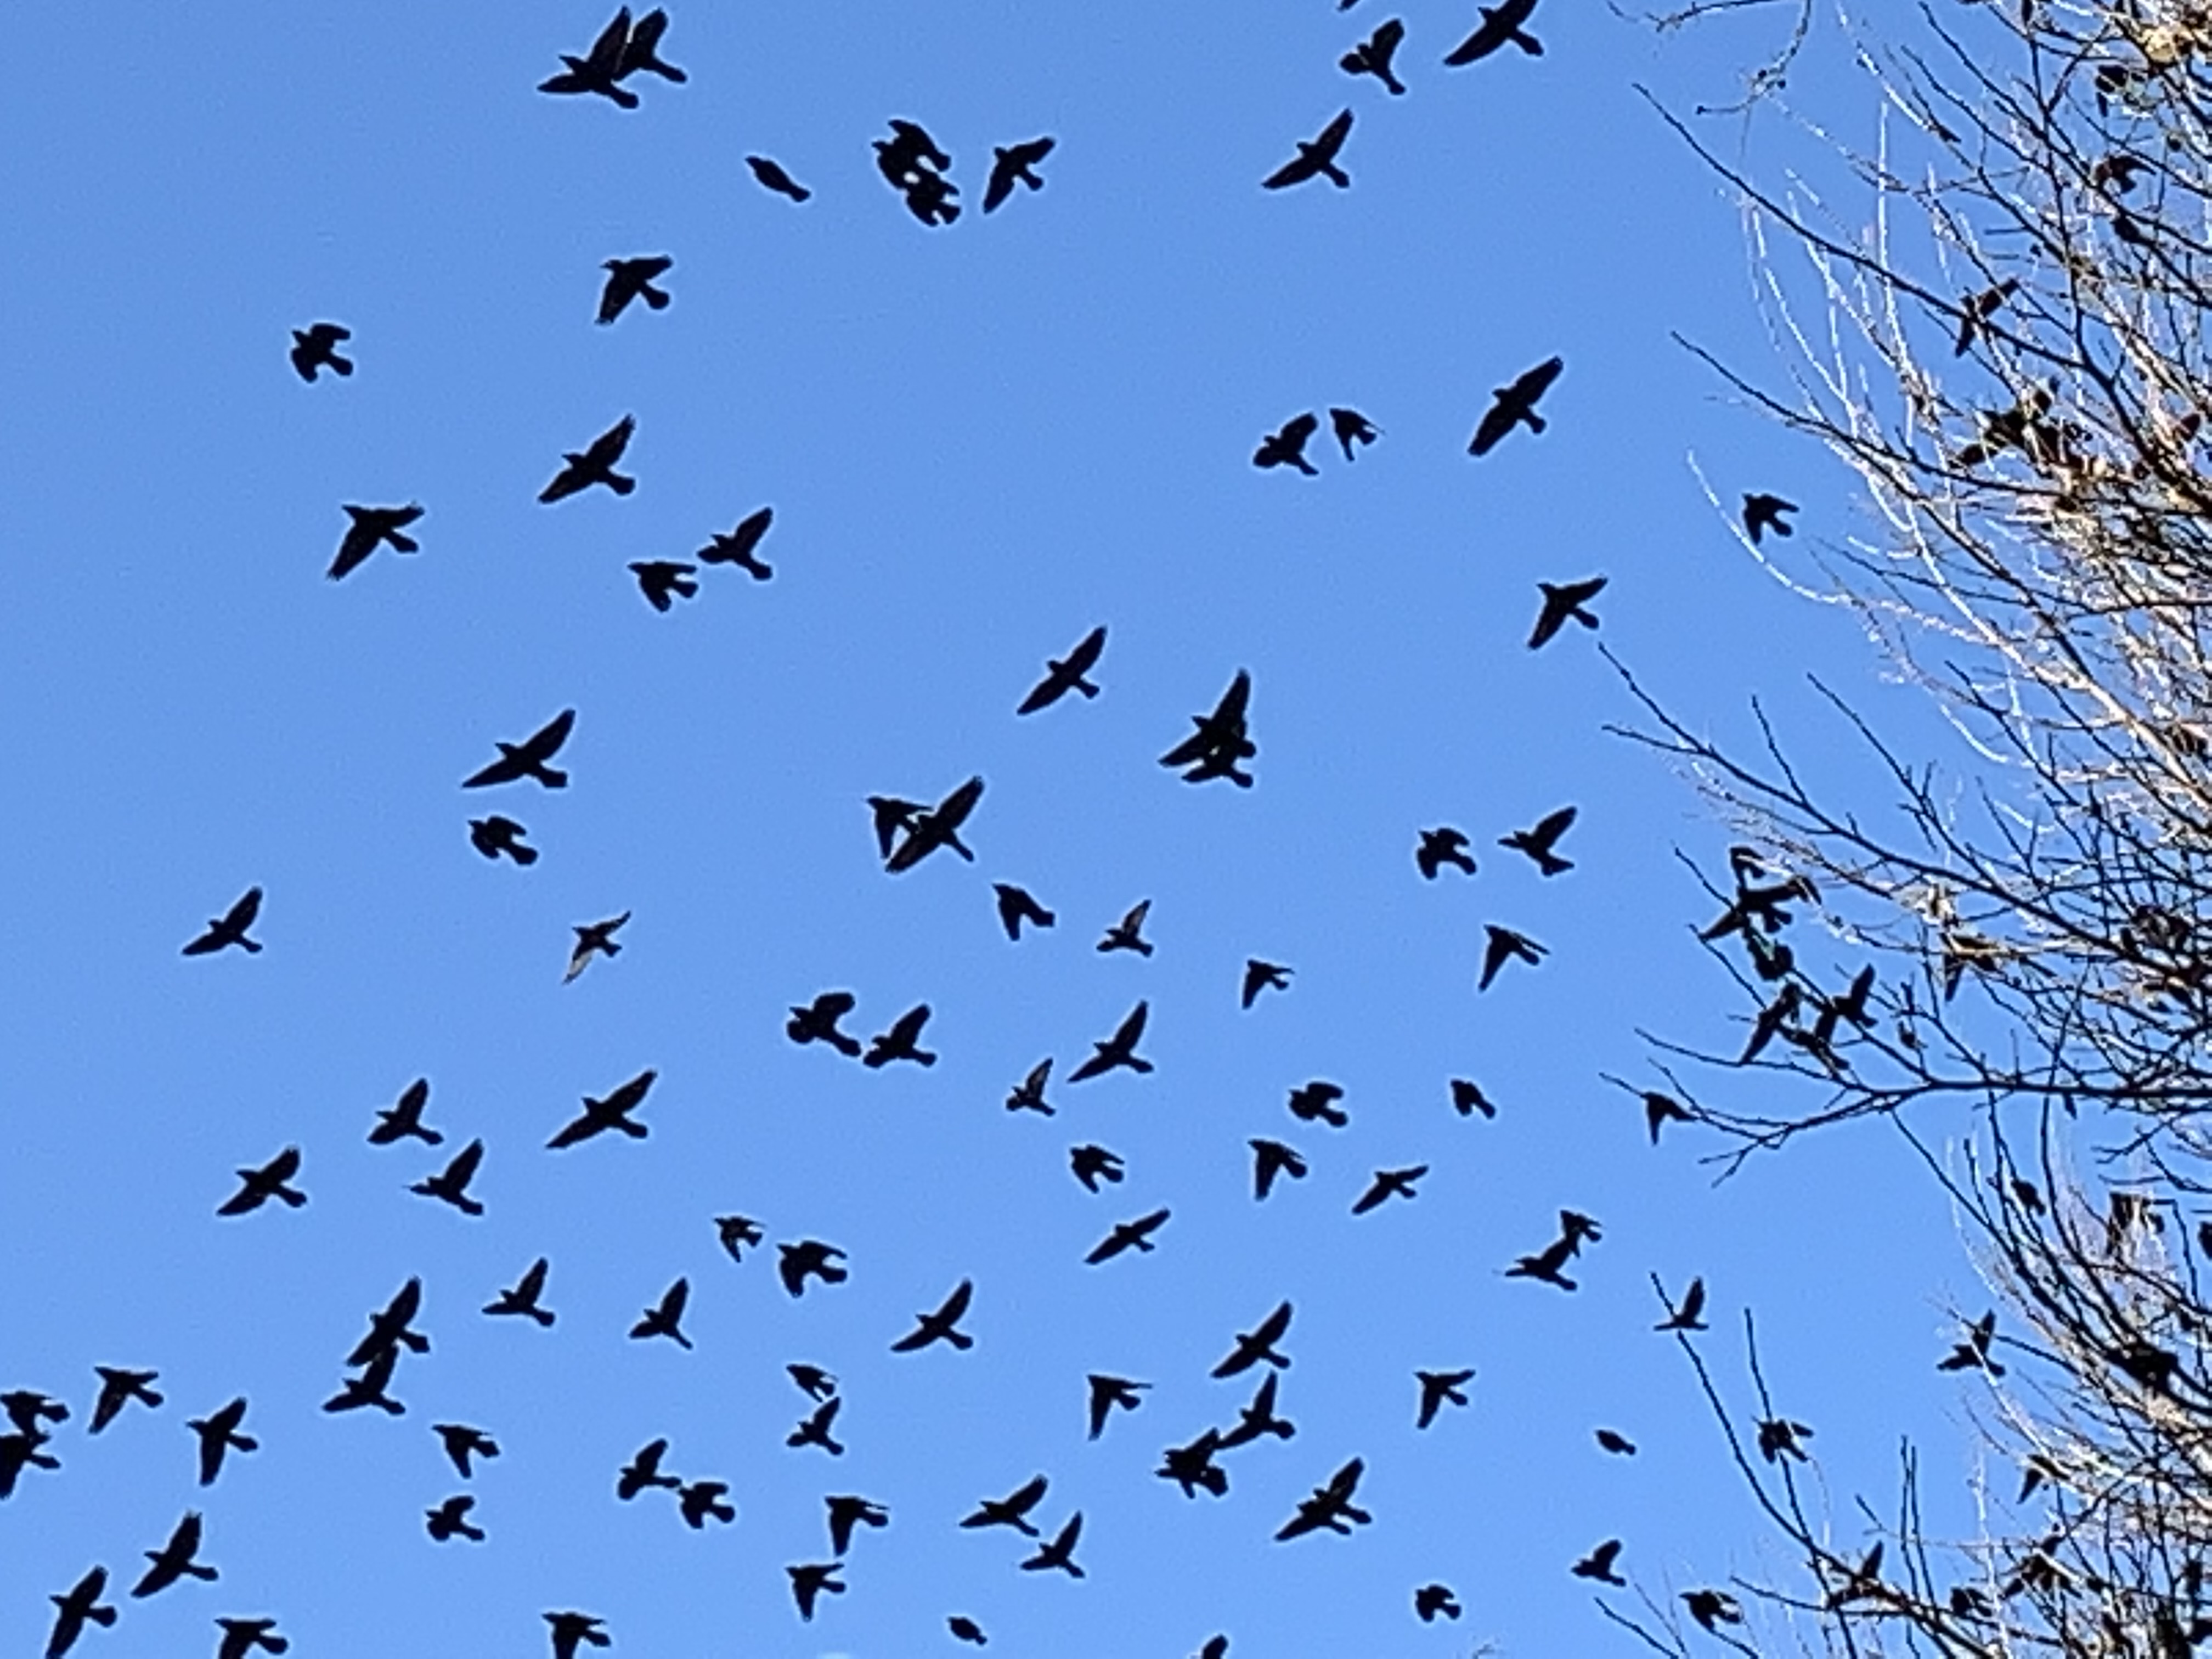 A flock of dozens of black, robin-size birds in flight against a blue autumn sky